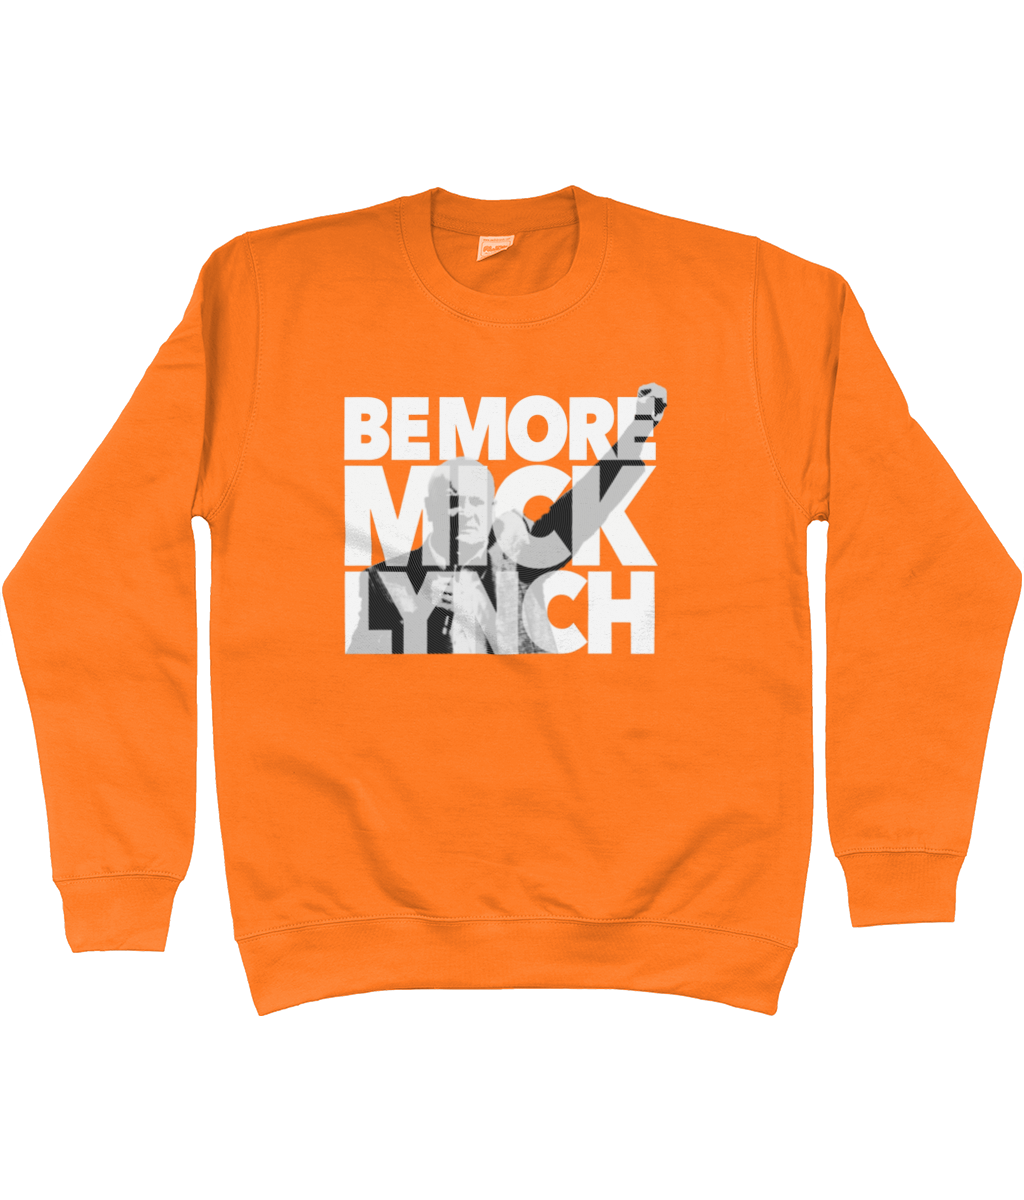 Be More Mick Lynch – Light on dark Sweatshirt